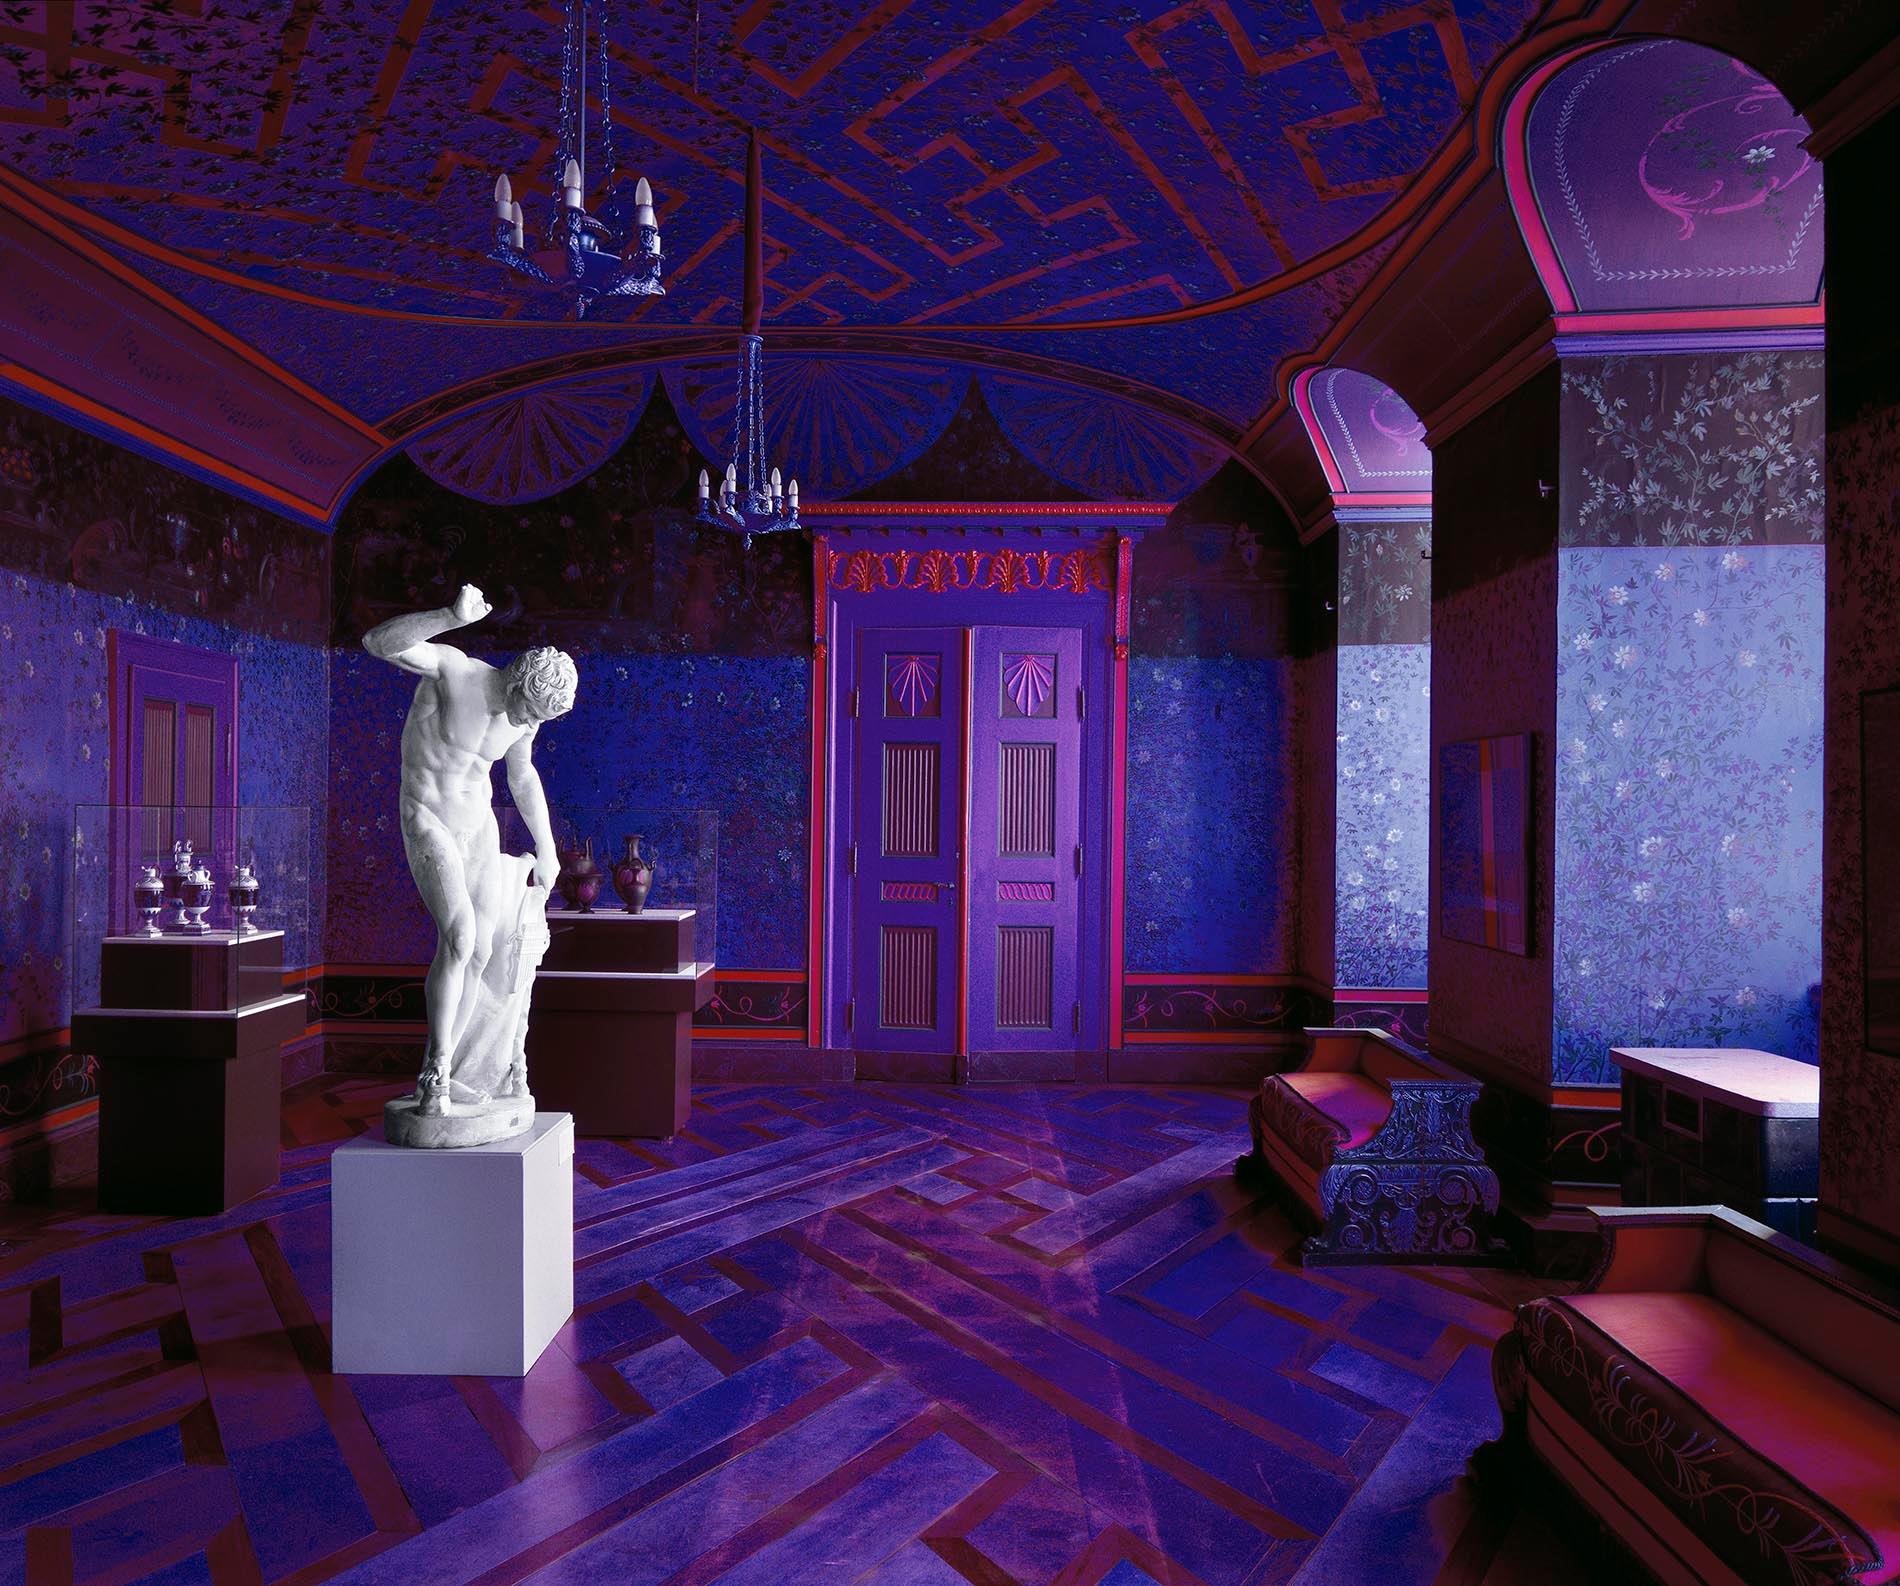 Massimo Listri Color Photograph - Castello die Friedstein, Gotha 1999 - violett interior with red an sculpture